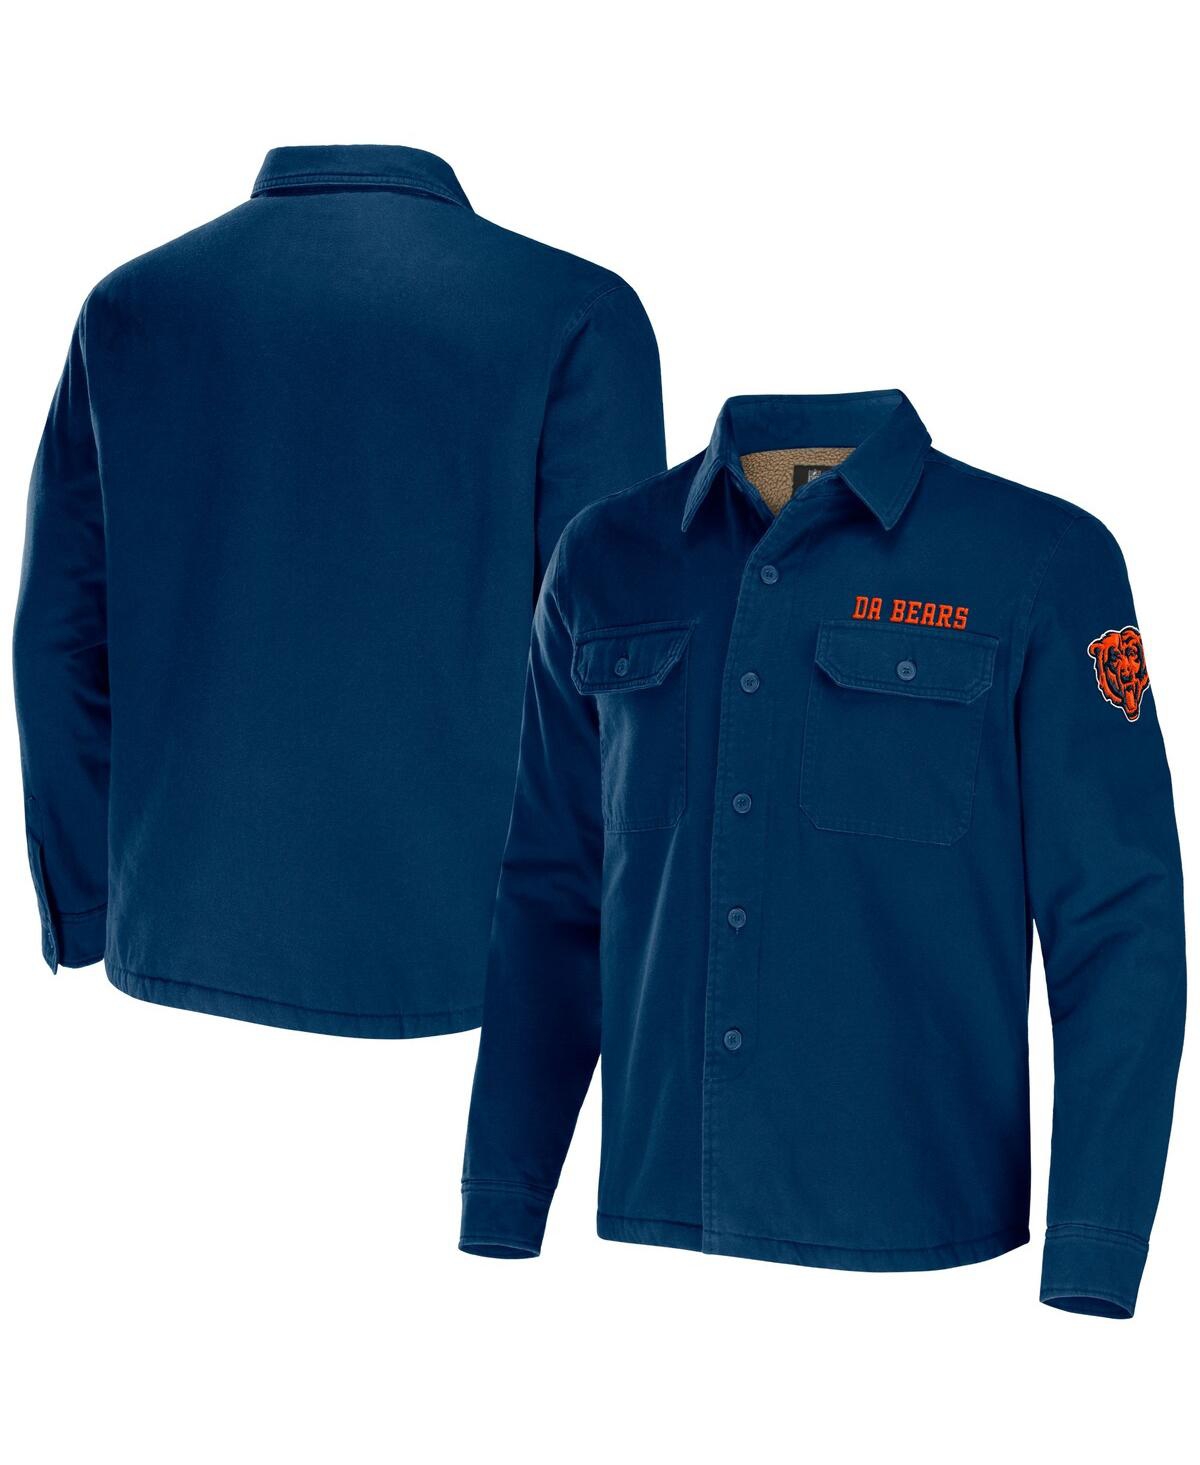 Men's Nfl x Darius Rucker Collection by Fanatics Navy Chicago Bears Canvas Button-Up Shirt Jacket - Navy